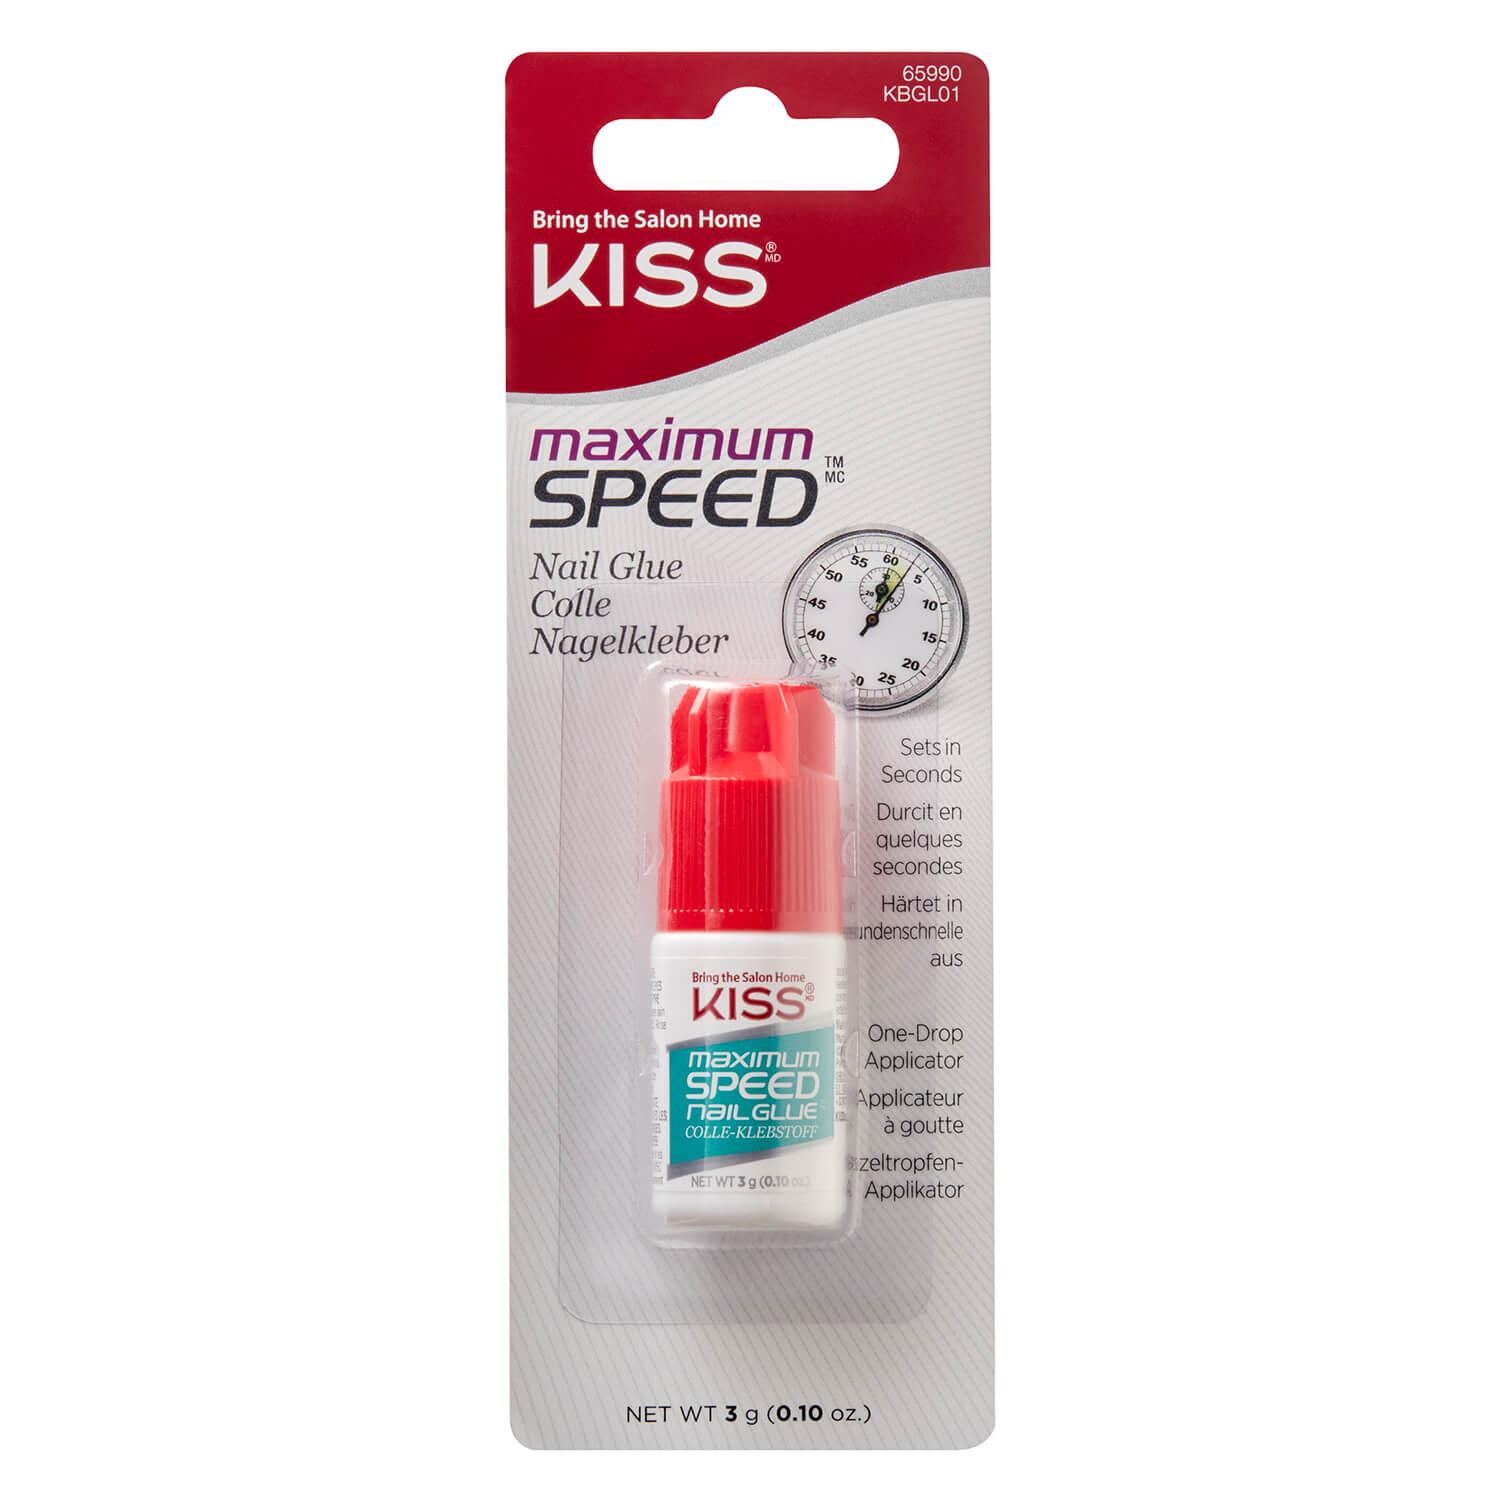 KISS Nails - Maximum Speed Nail Glue